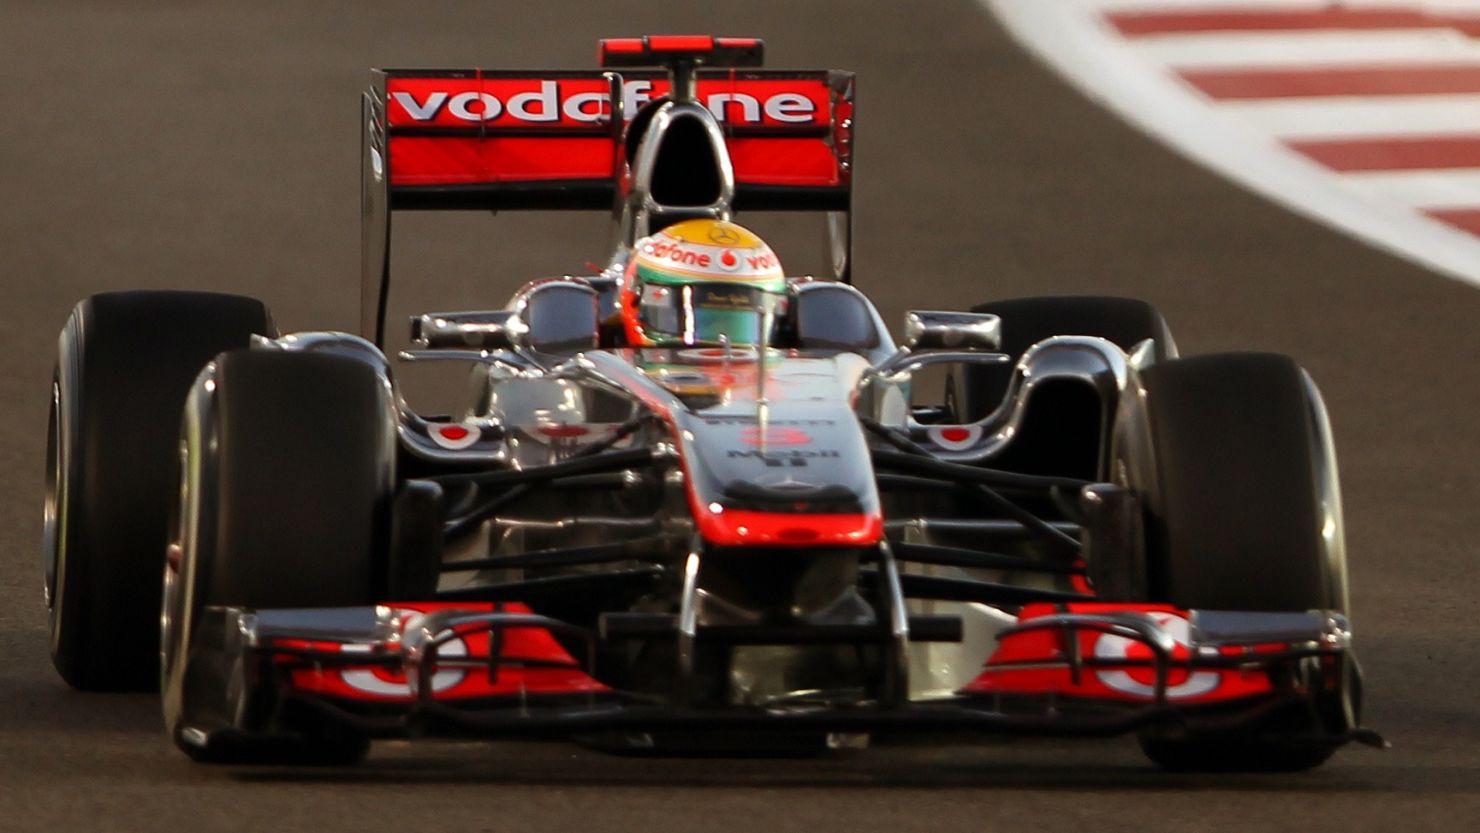 McLaren driver Lewis Hamilton has won two races so far in the 2011 Formula One season.